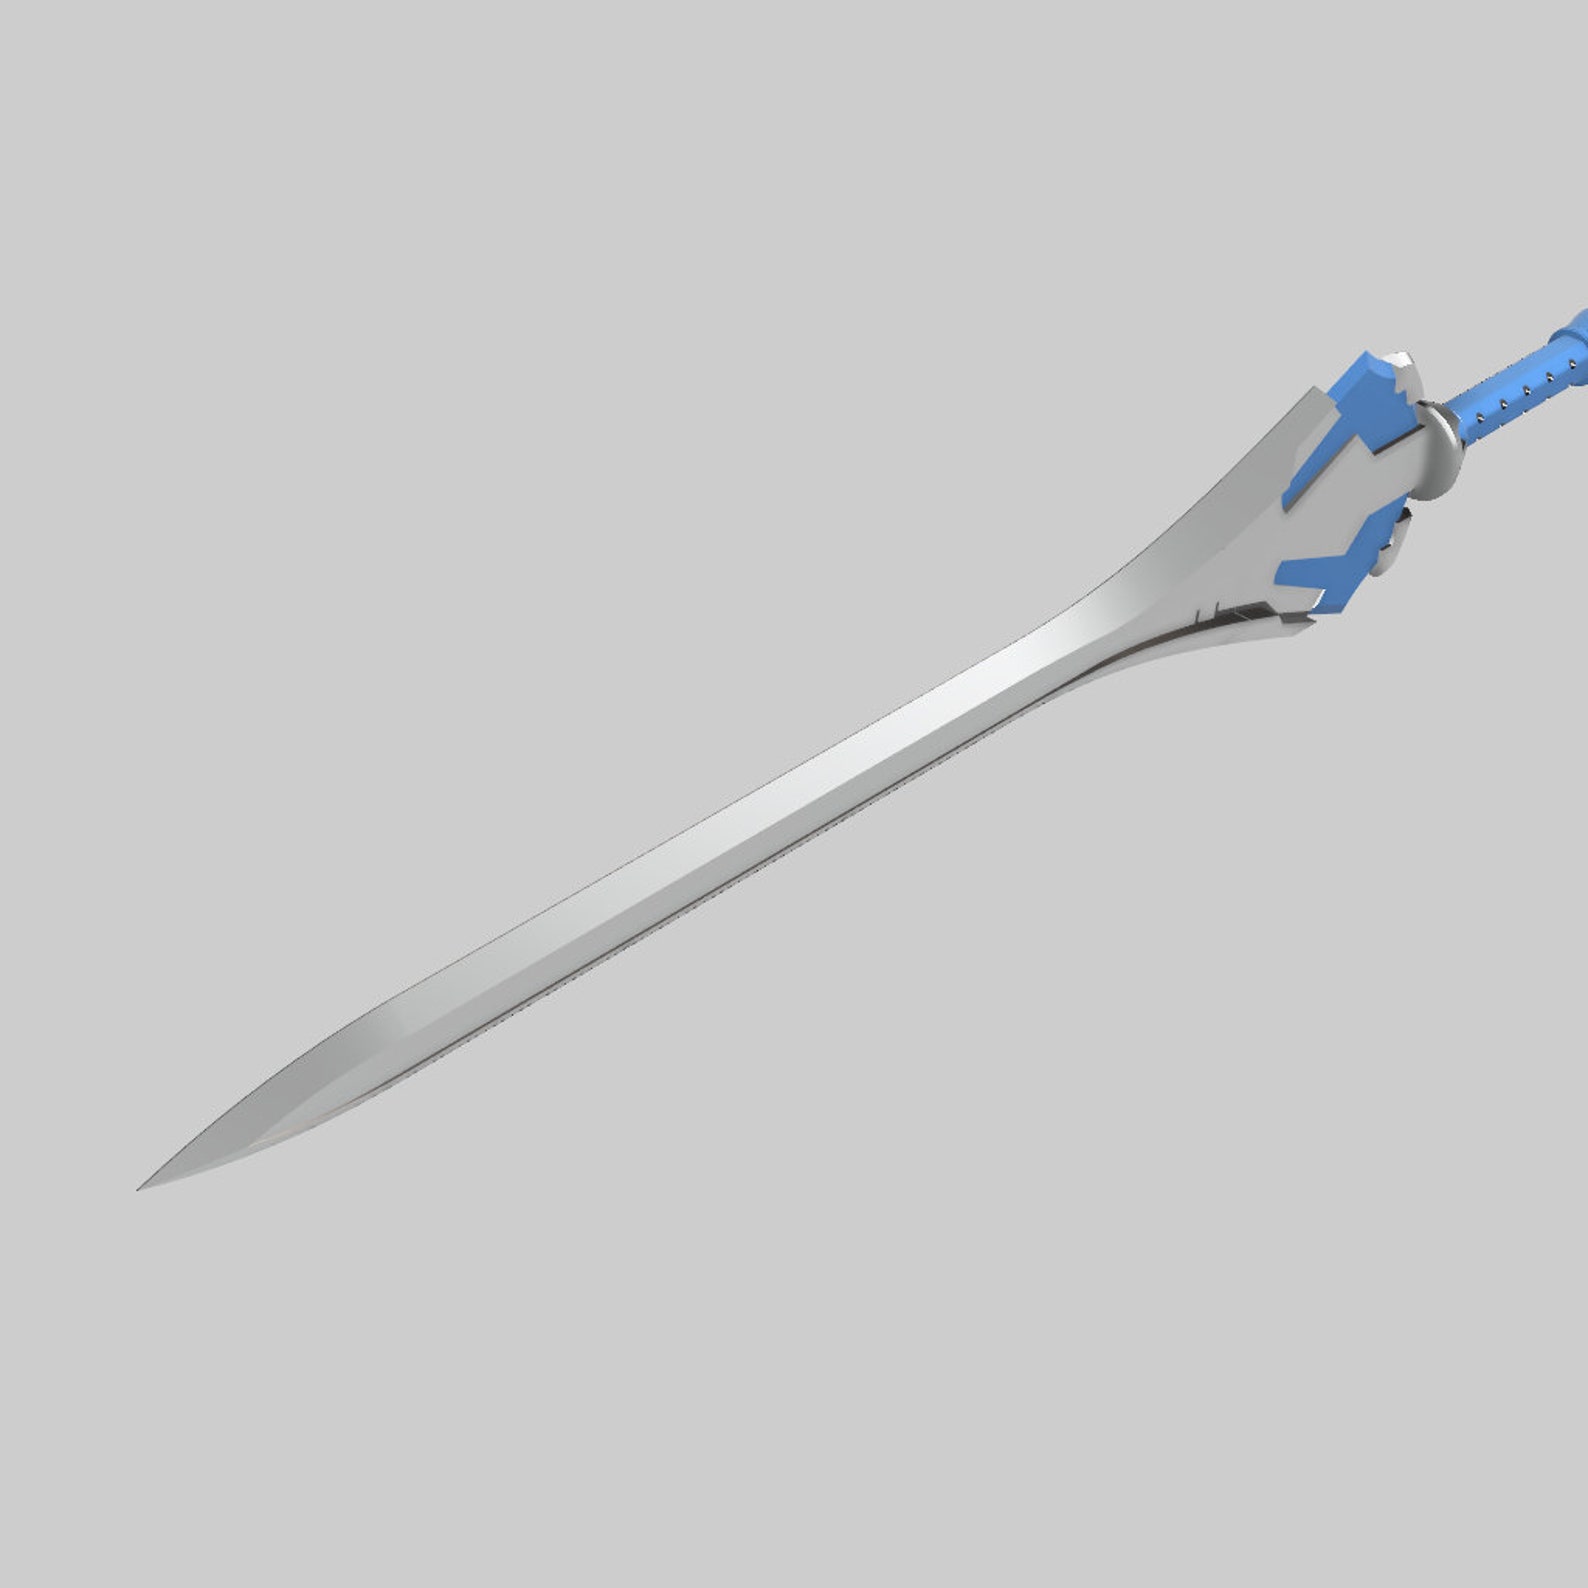 Galantine Gawain Sword Files for 3D Printing - Etsy